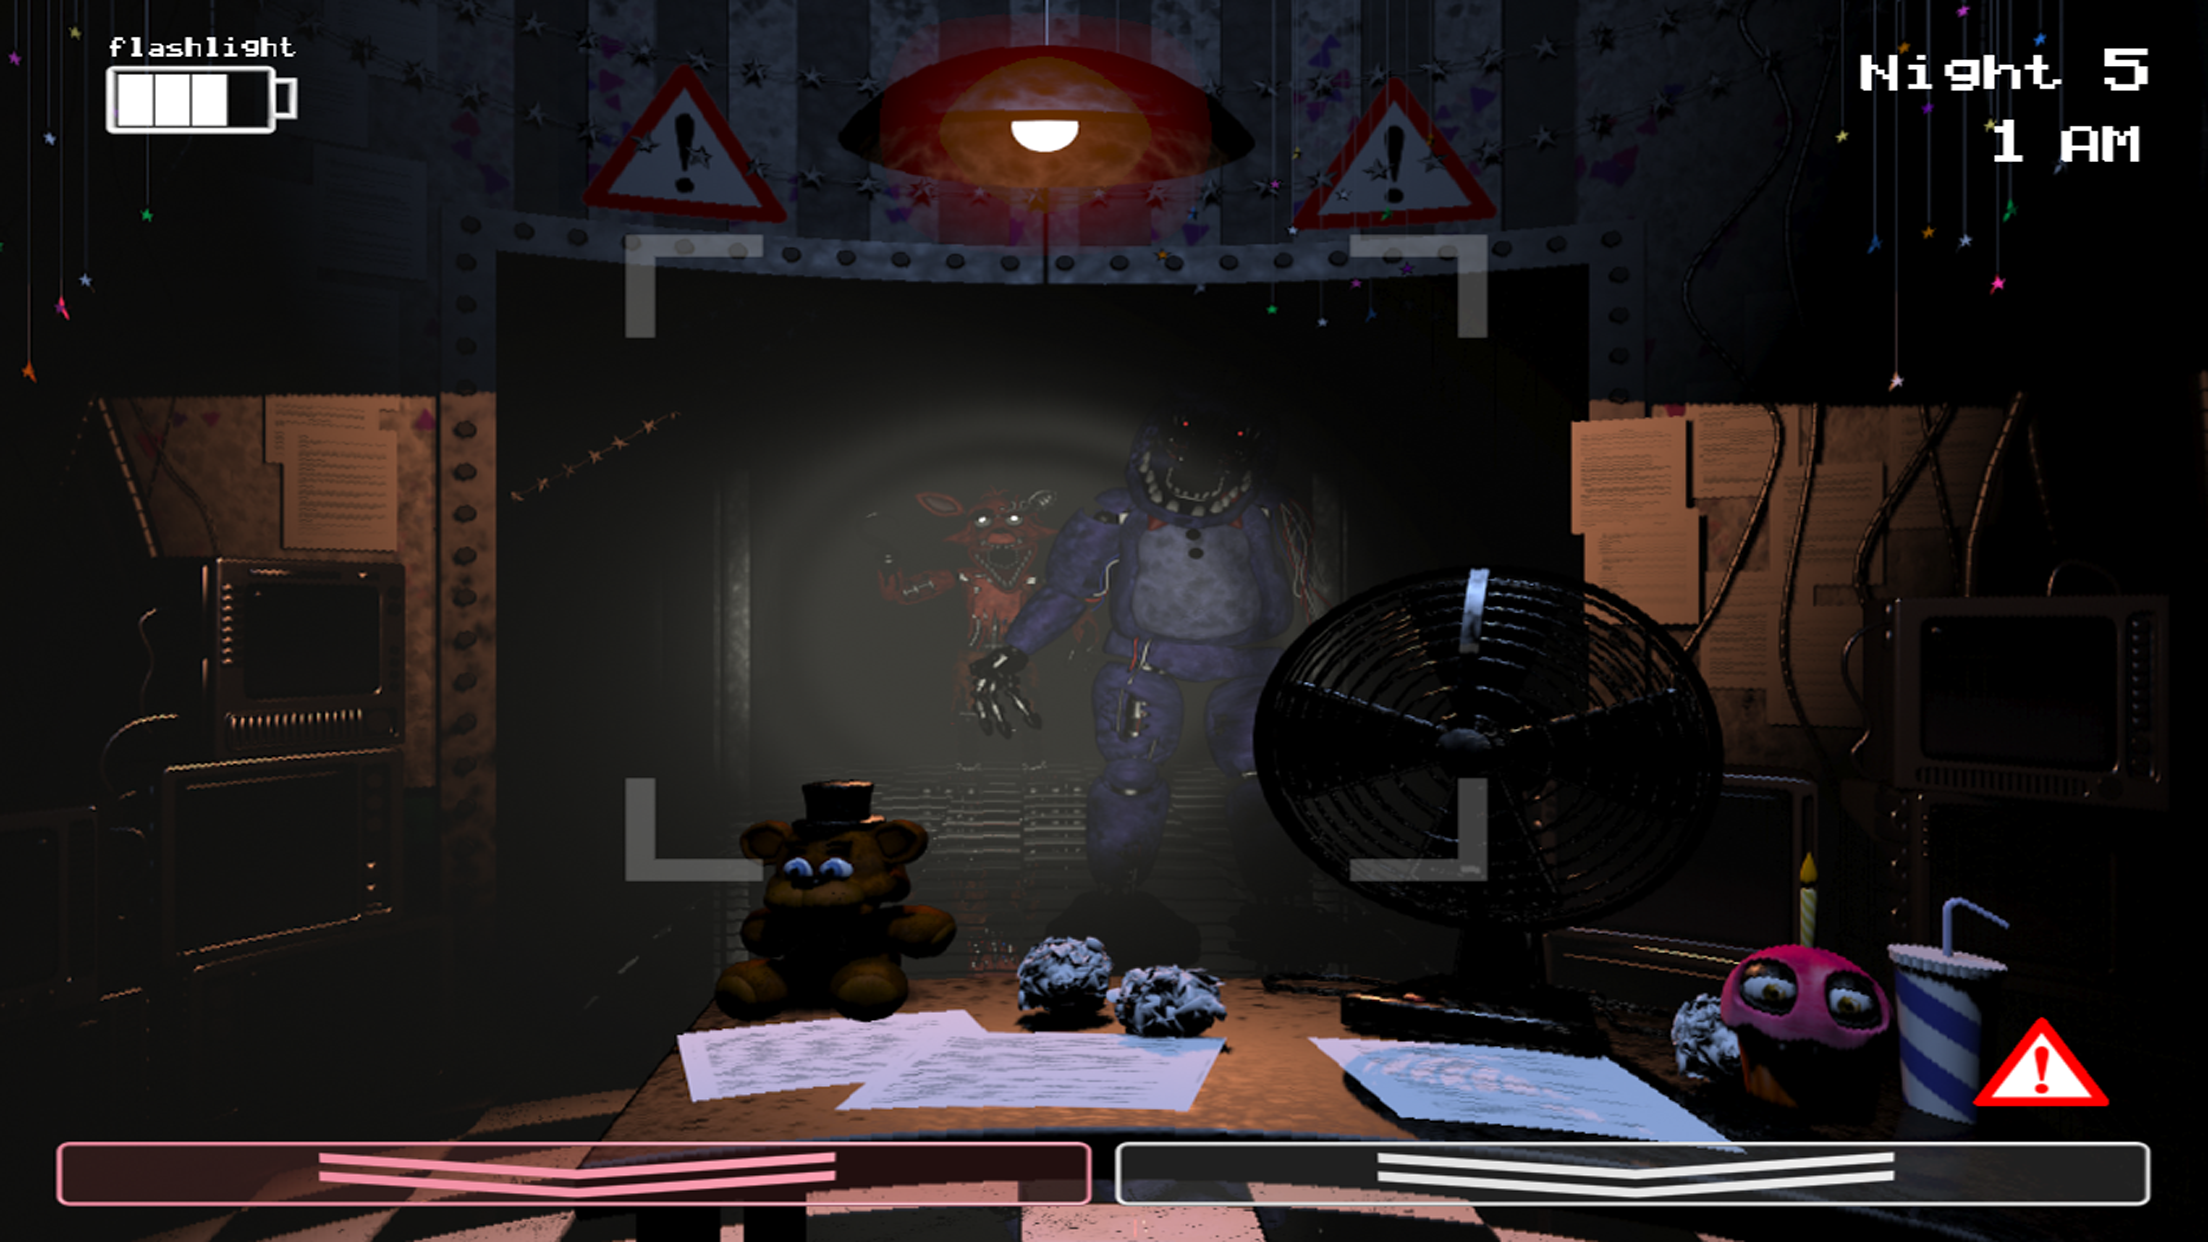 Five Nights at Freddy's 4 Doom Mod Free Download - FNAF Fan Games